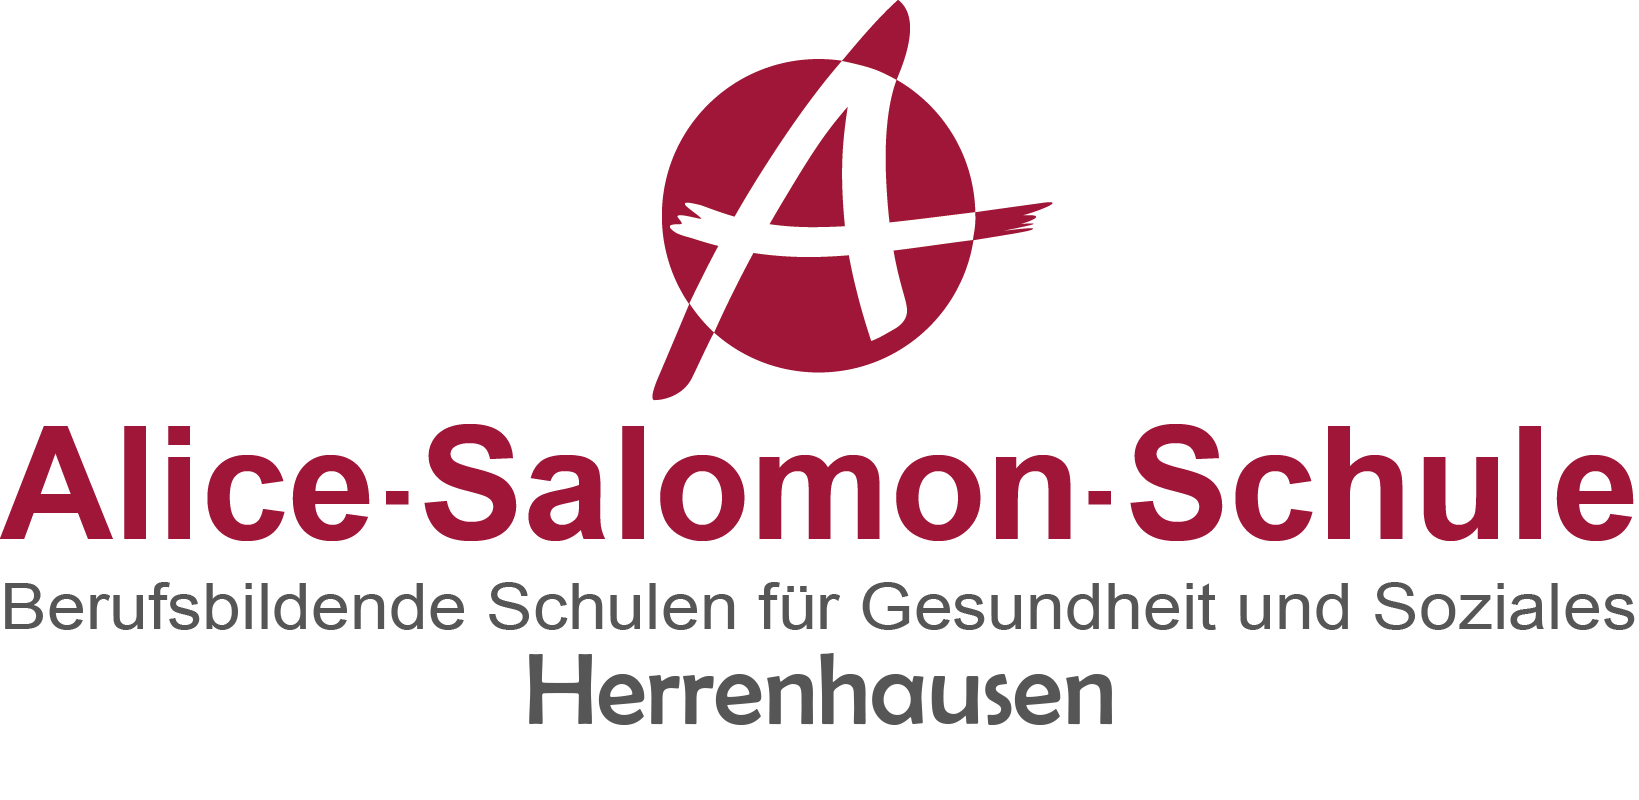 Alice-Salomon-Schule